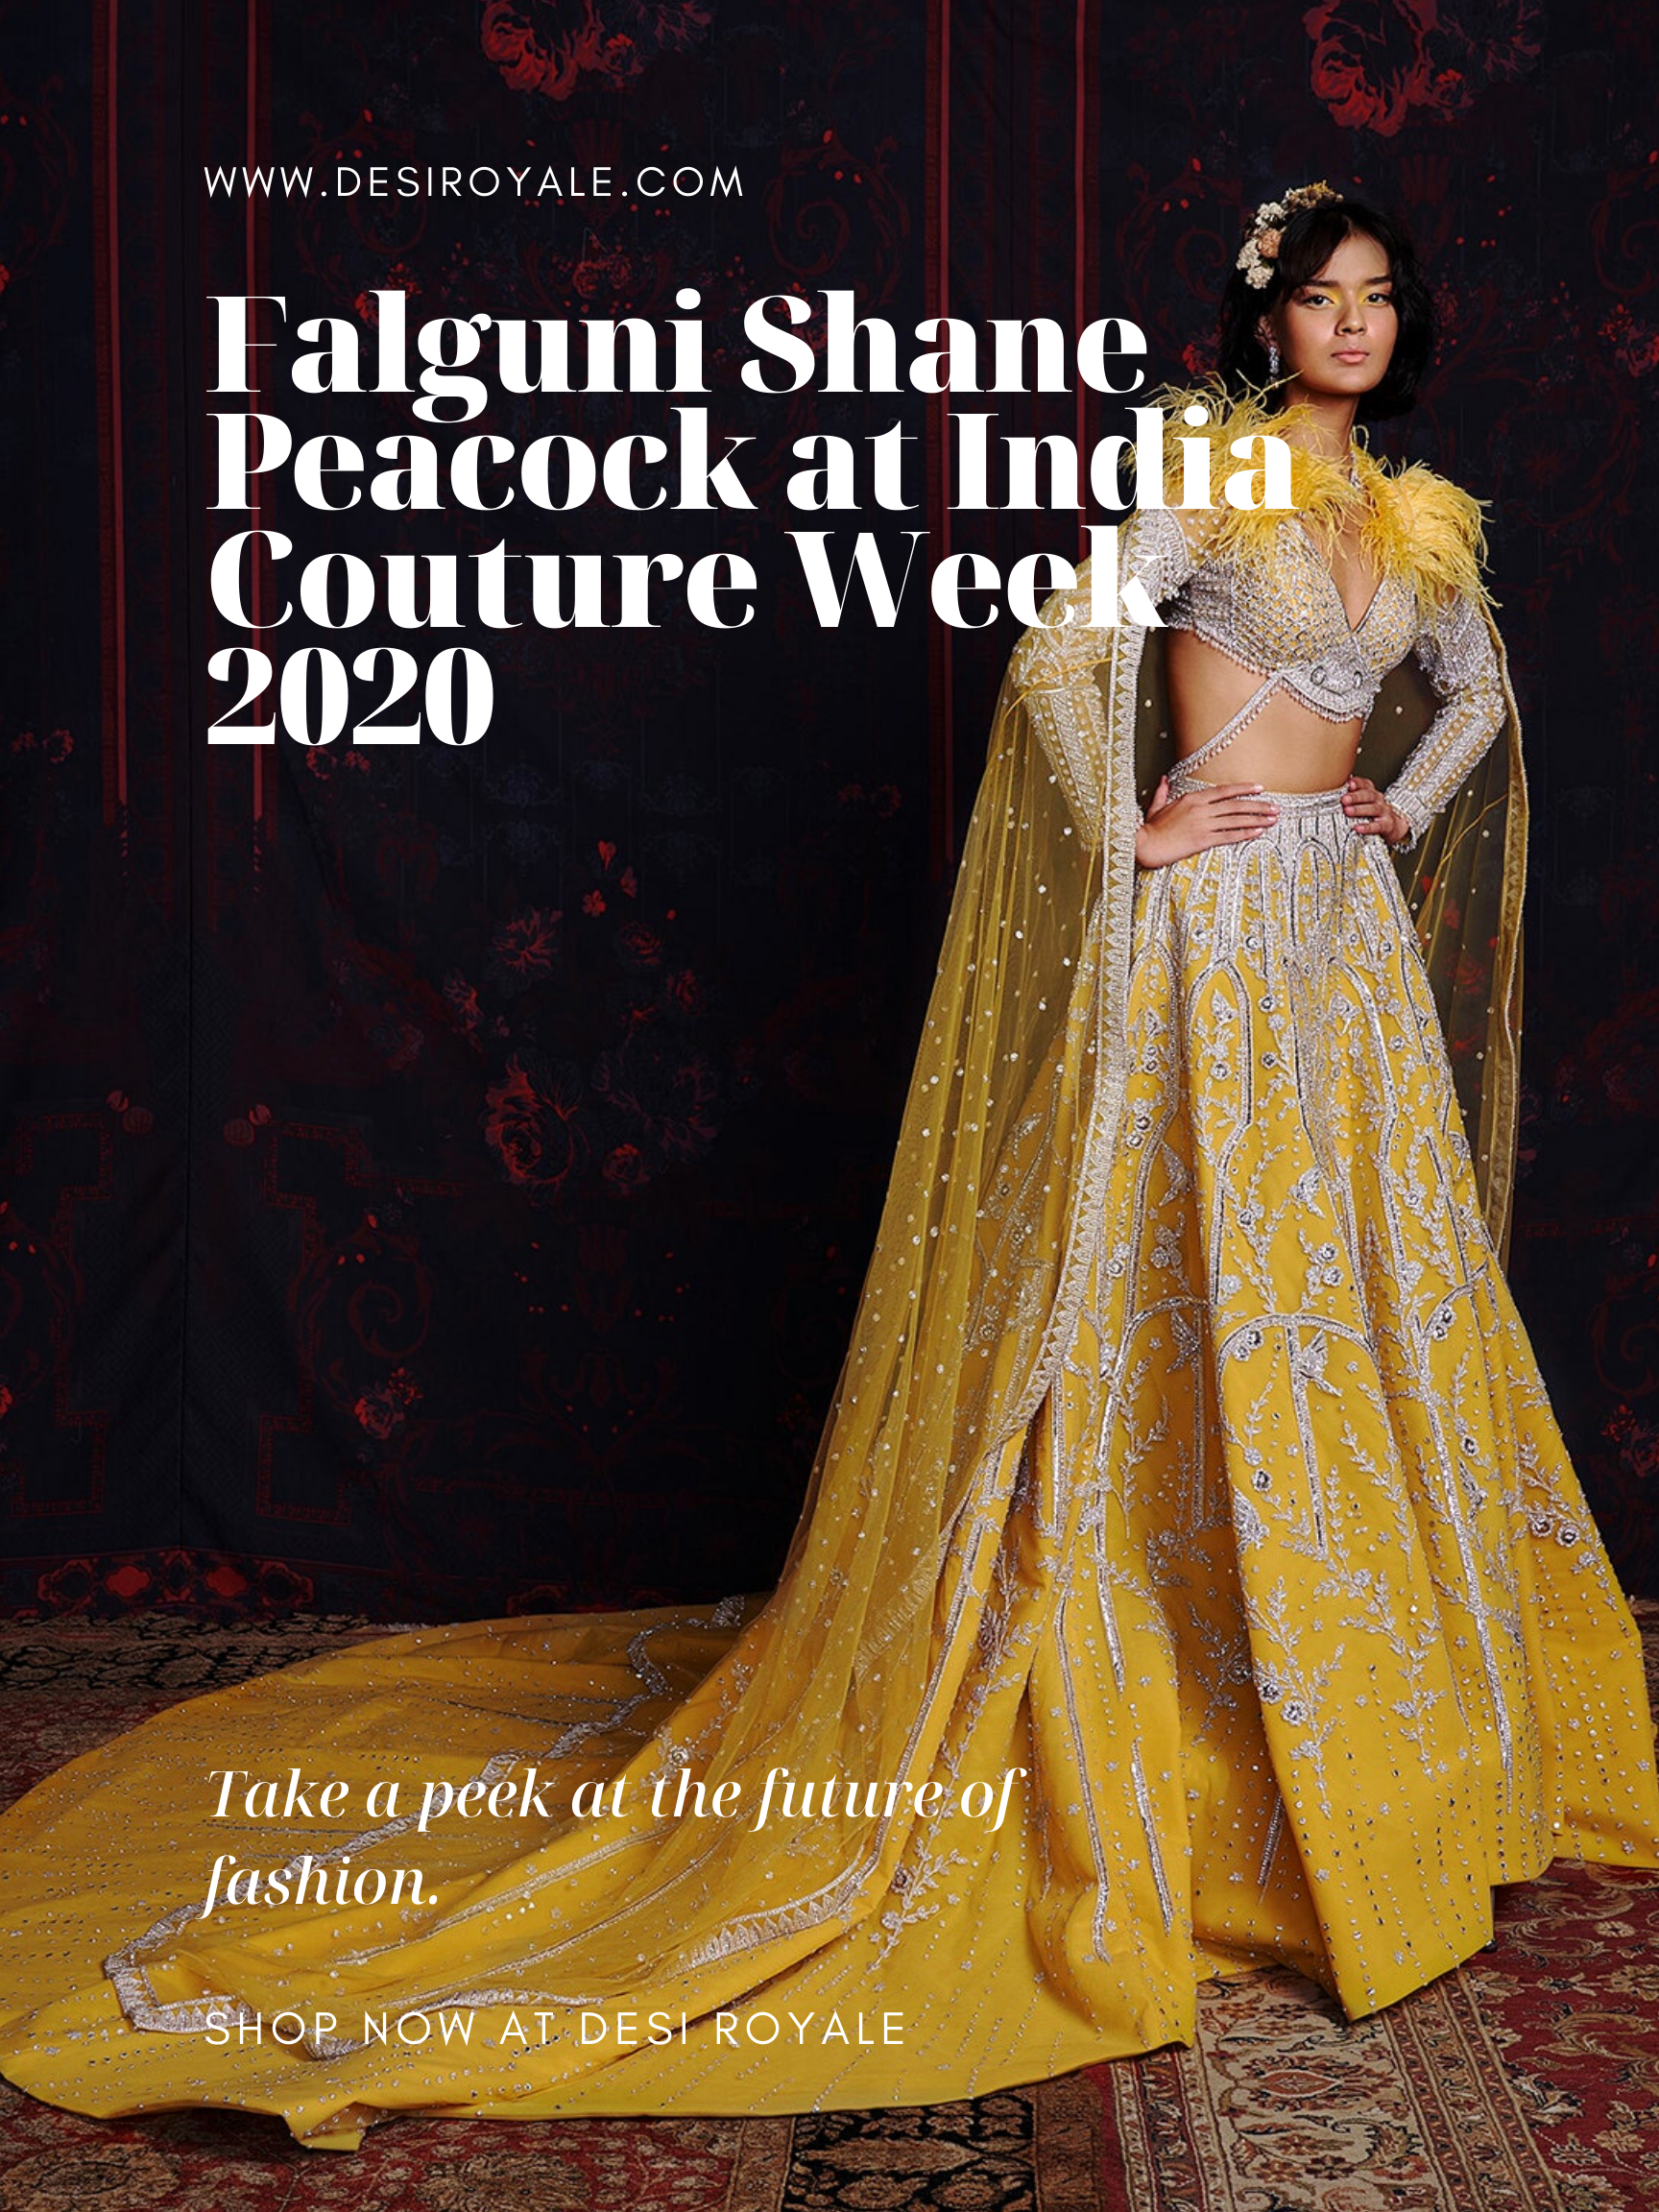 Falguni Shane Peacock at India Couture Week 2020